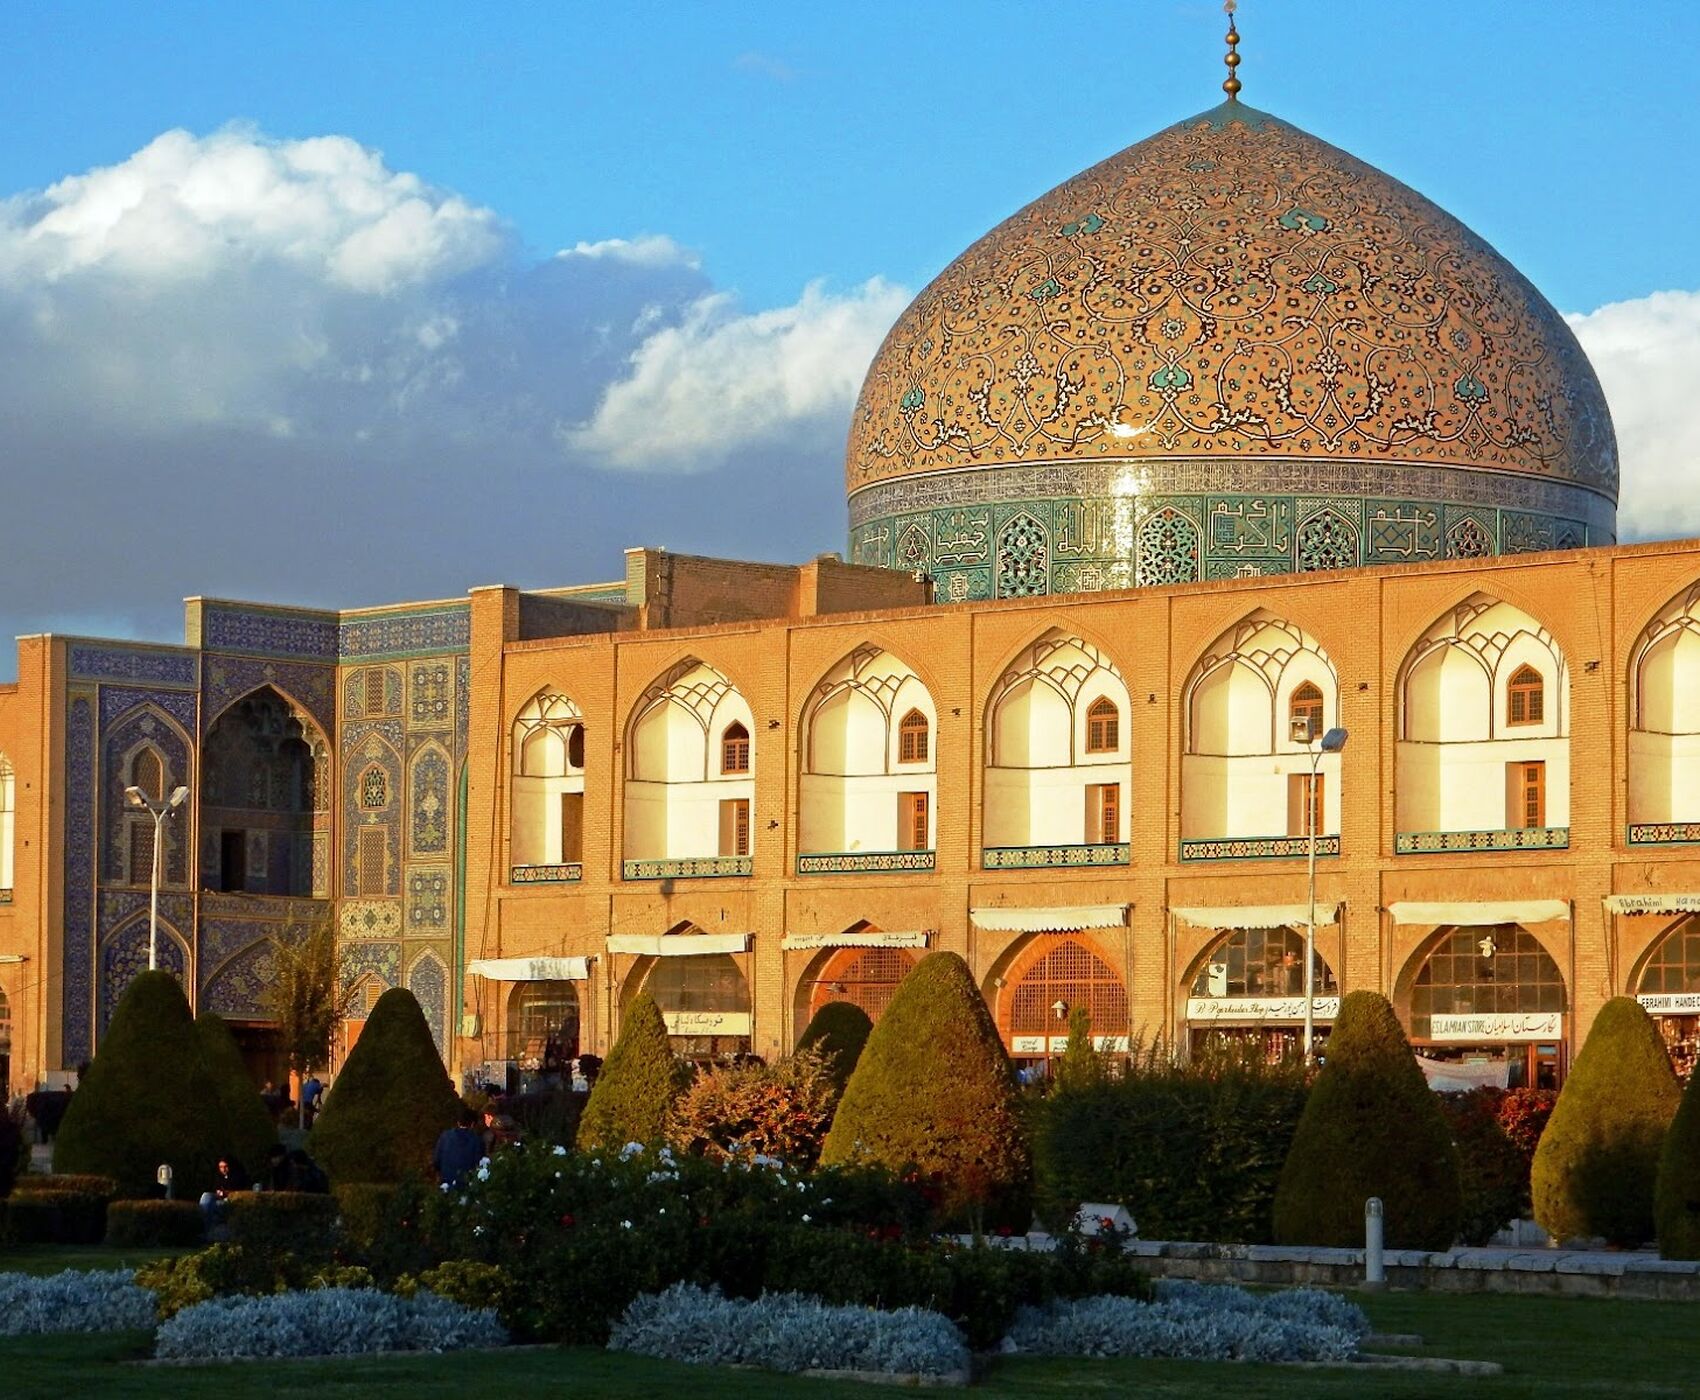 GREAT IRAN TOUR FROM ANTALYA